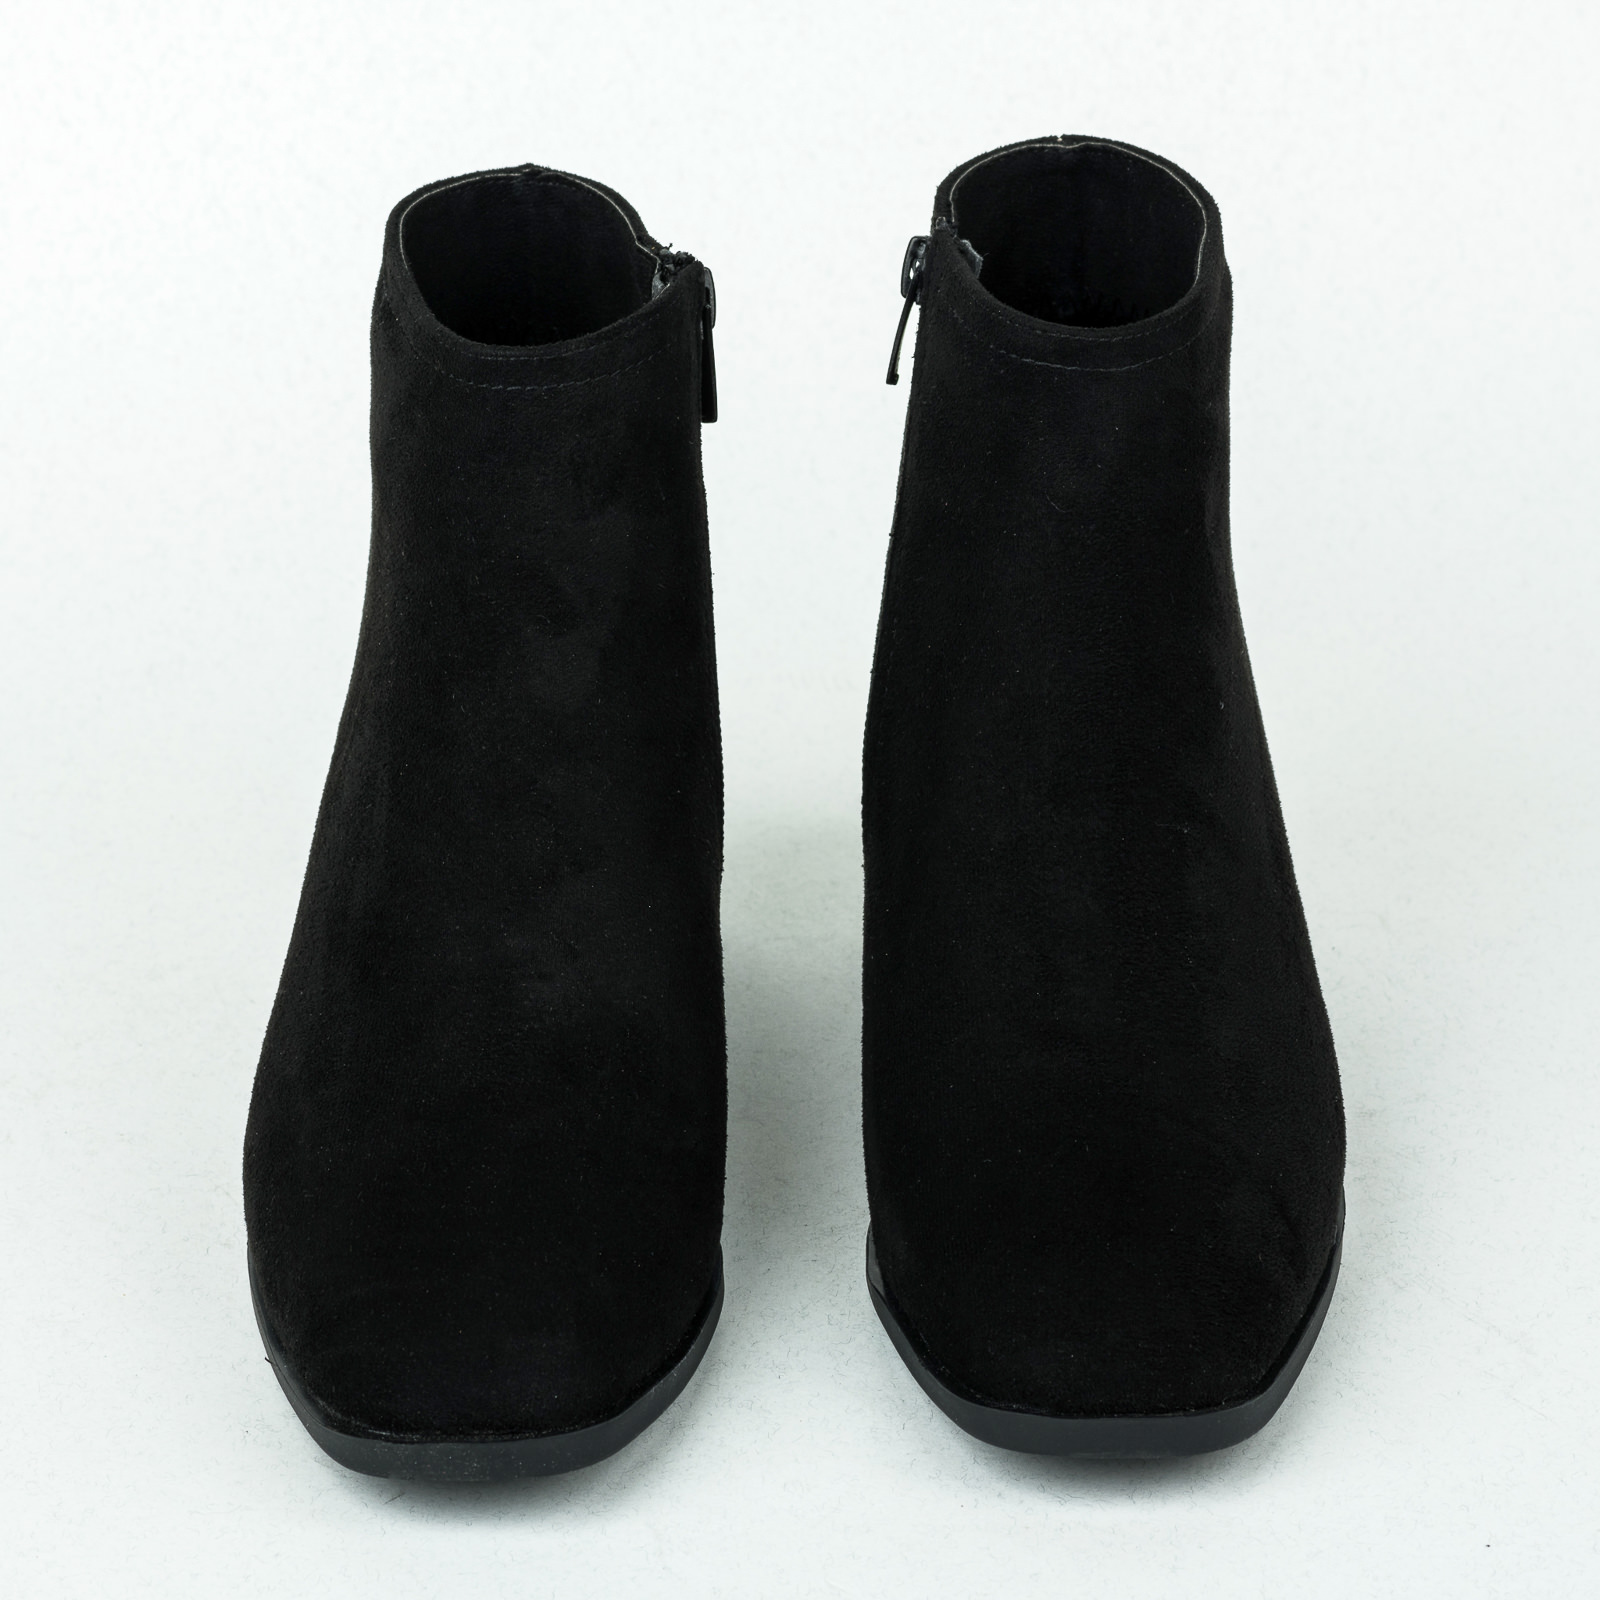 Women ankle boots B281 - BLACK